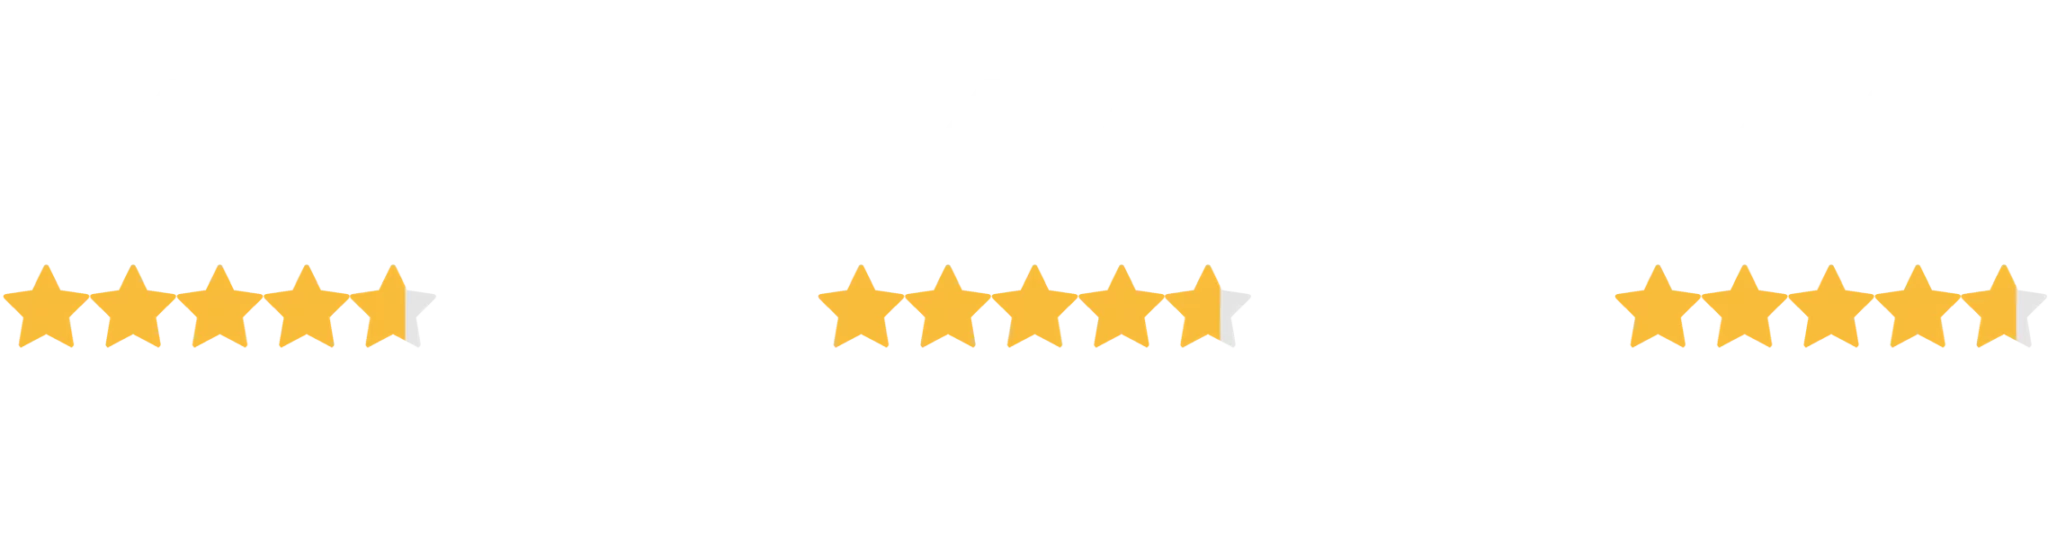 Reviews-Scores